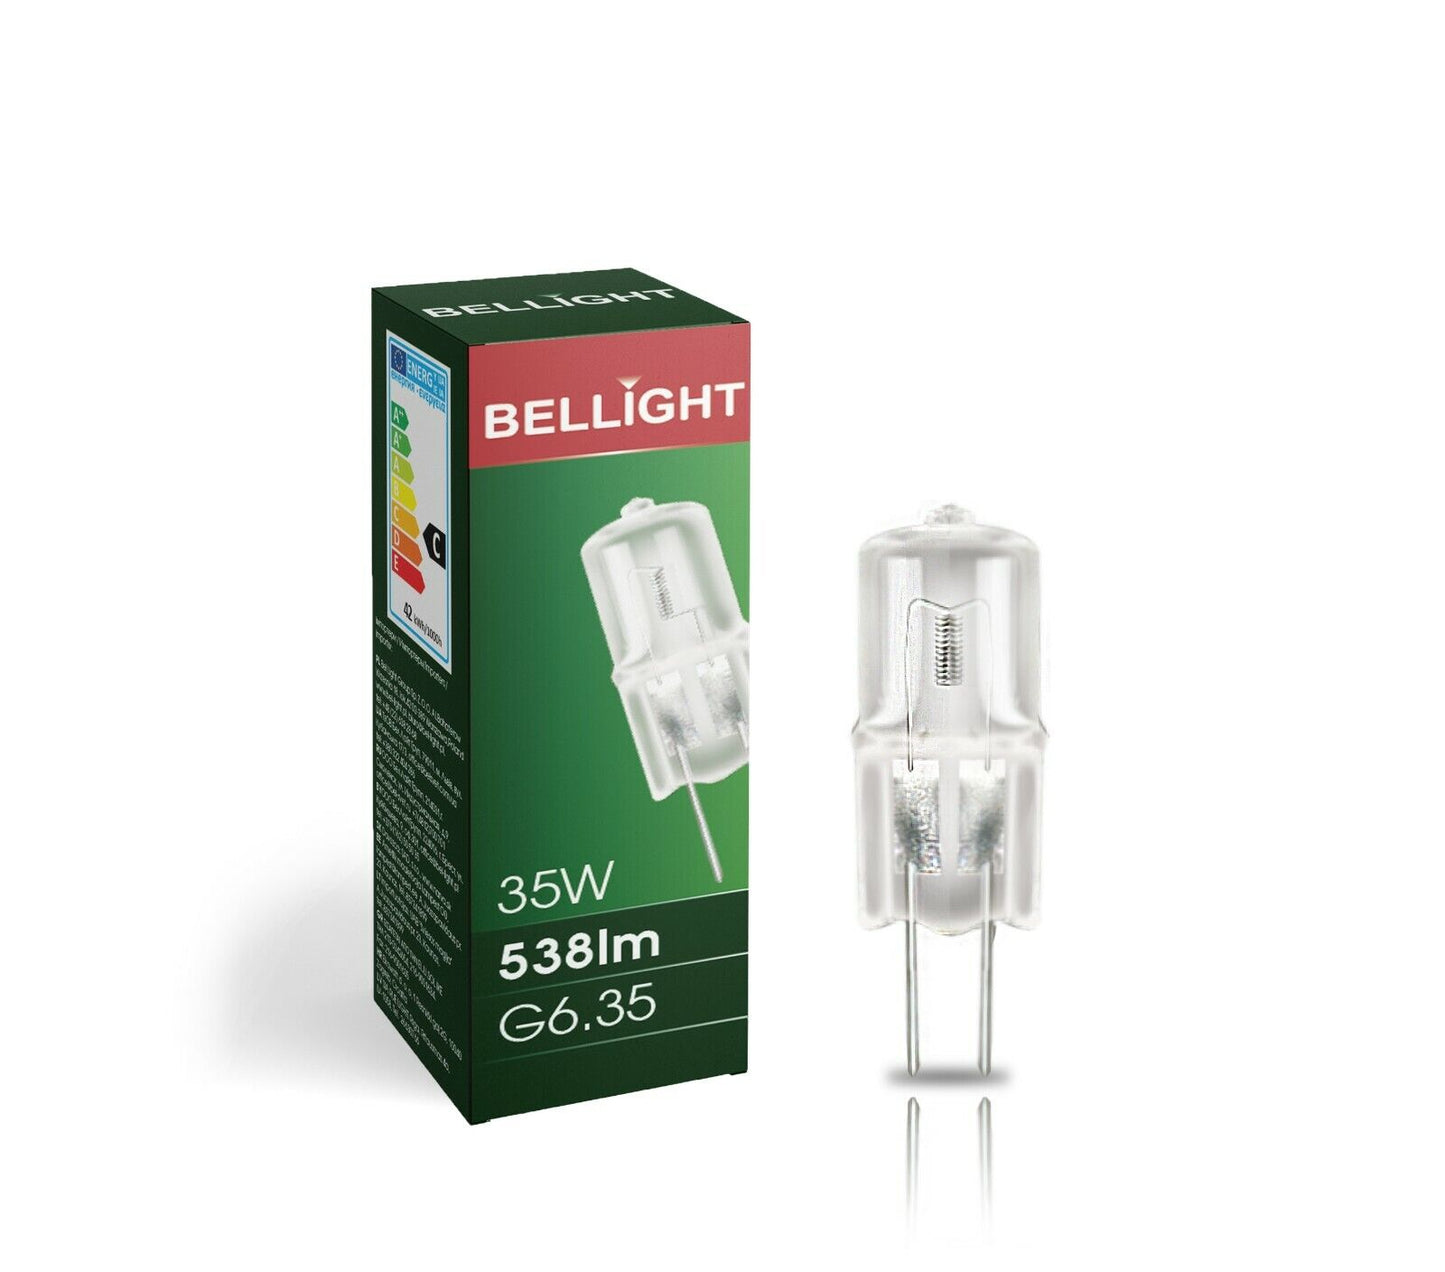 Bellight JC G6.35 Halogen 35W Stiftsockel Klar GY6.35 Leuchtmittel 538lm Warmweiß dimmbar